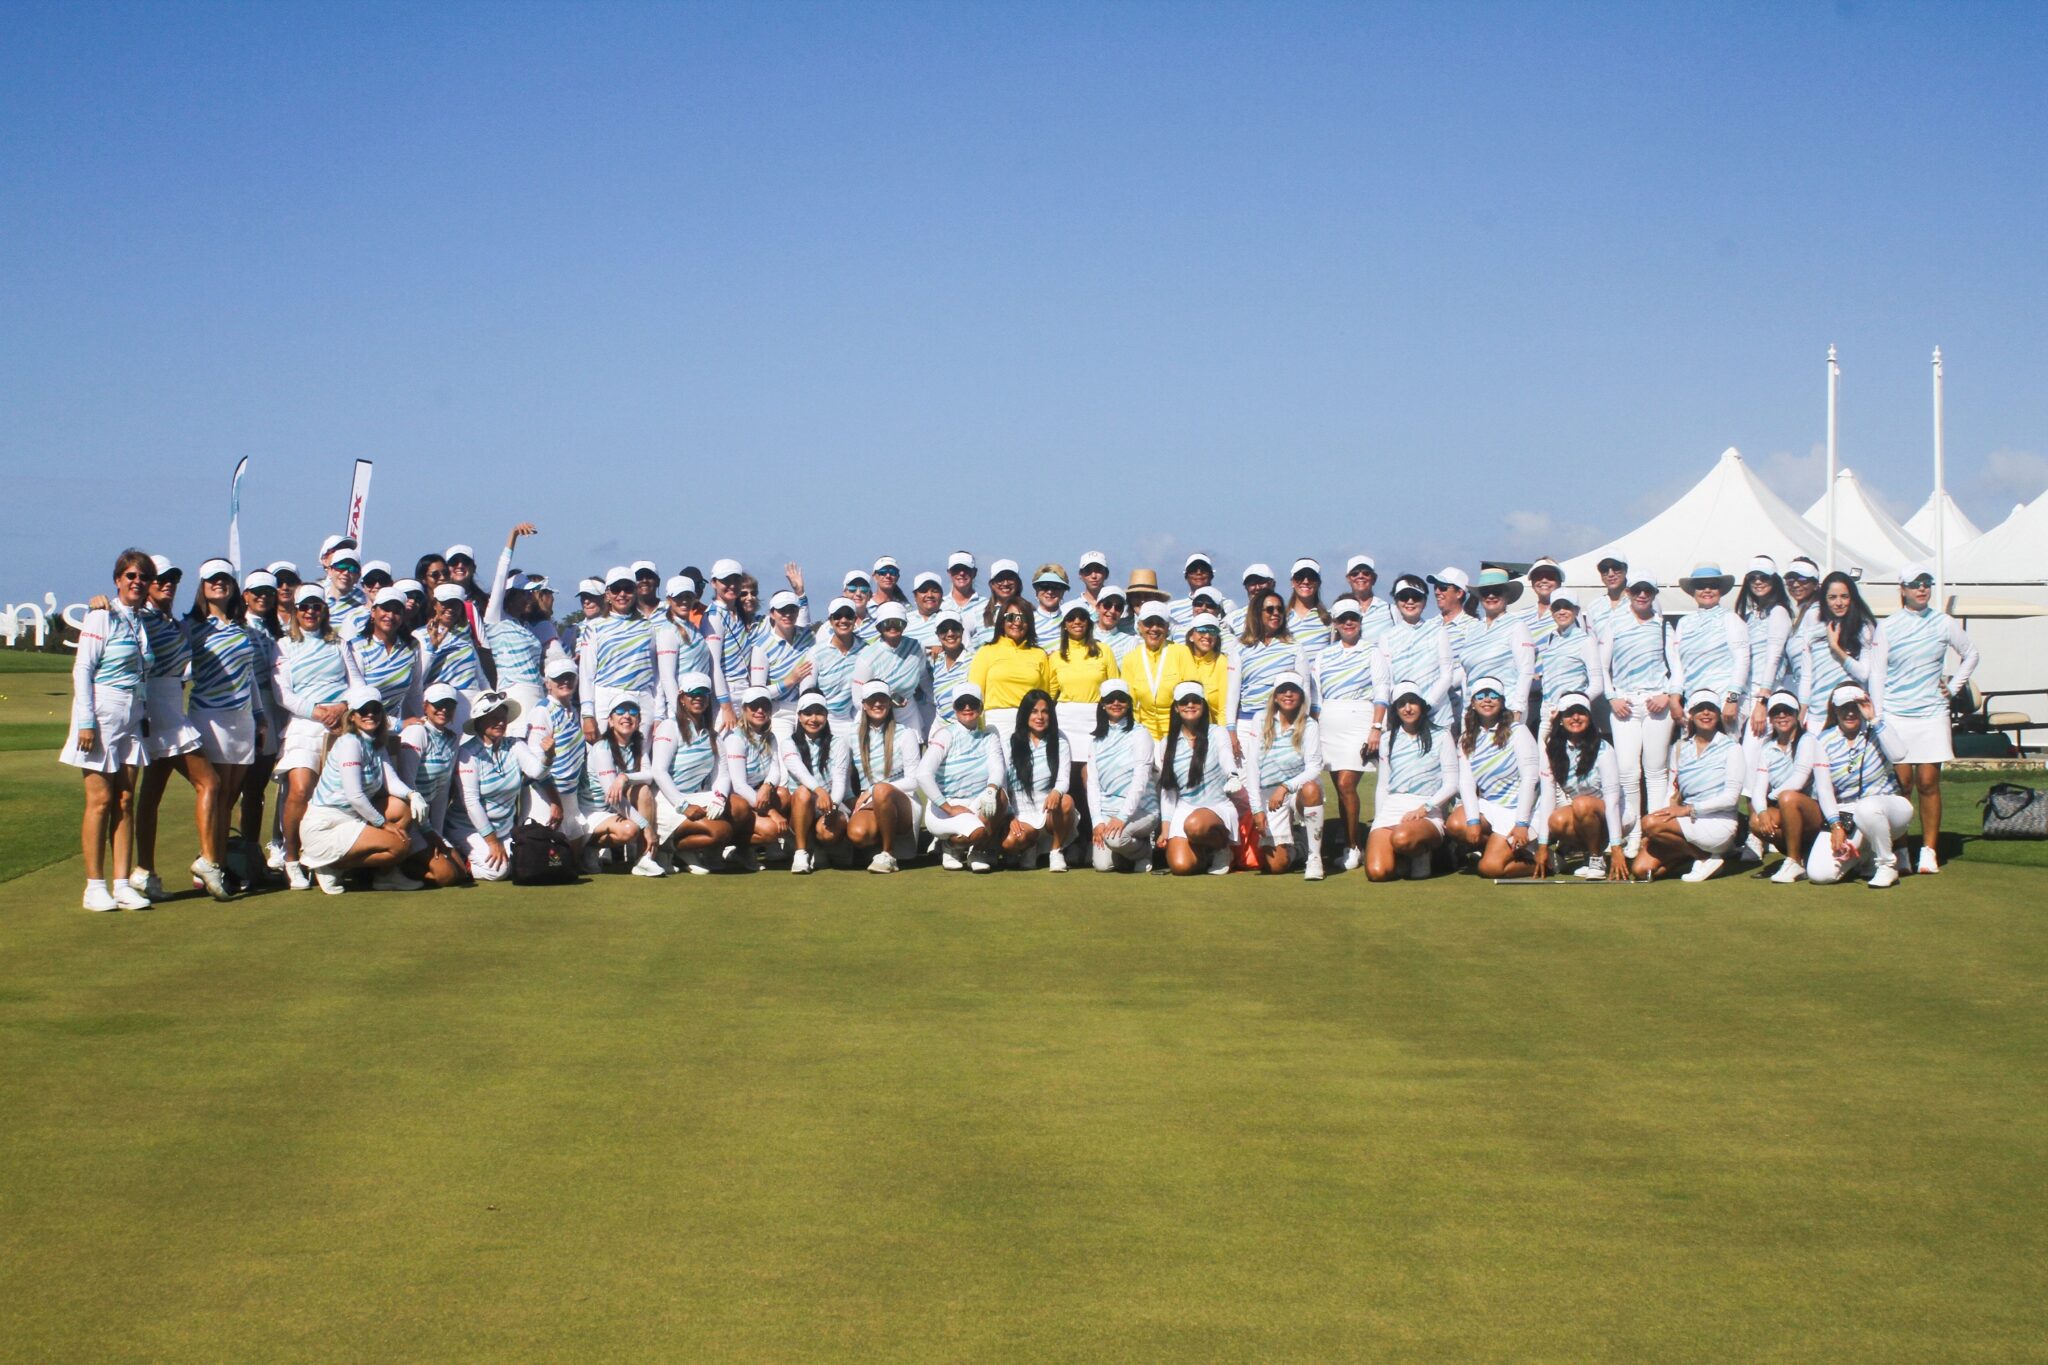 Lpga Amateurs Golf Association Realizó El Member And Guest Tournament En Pga Oceans 4 Noticias 4371